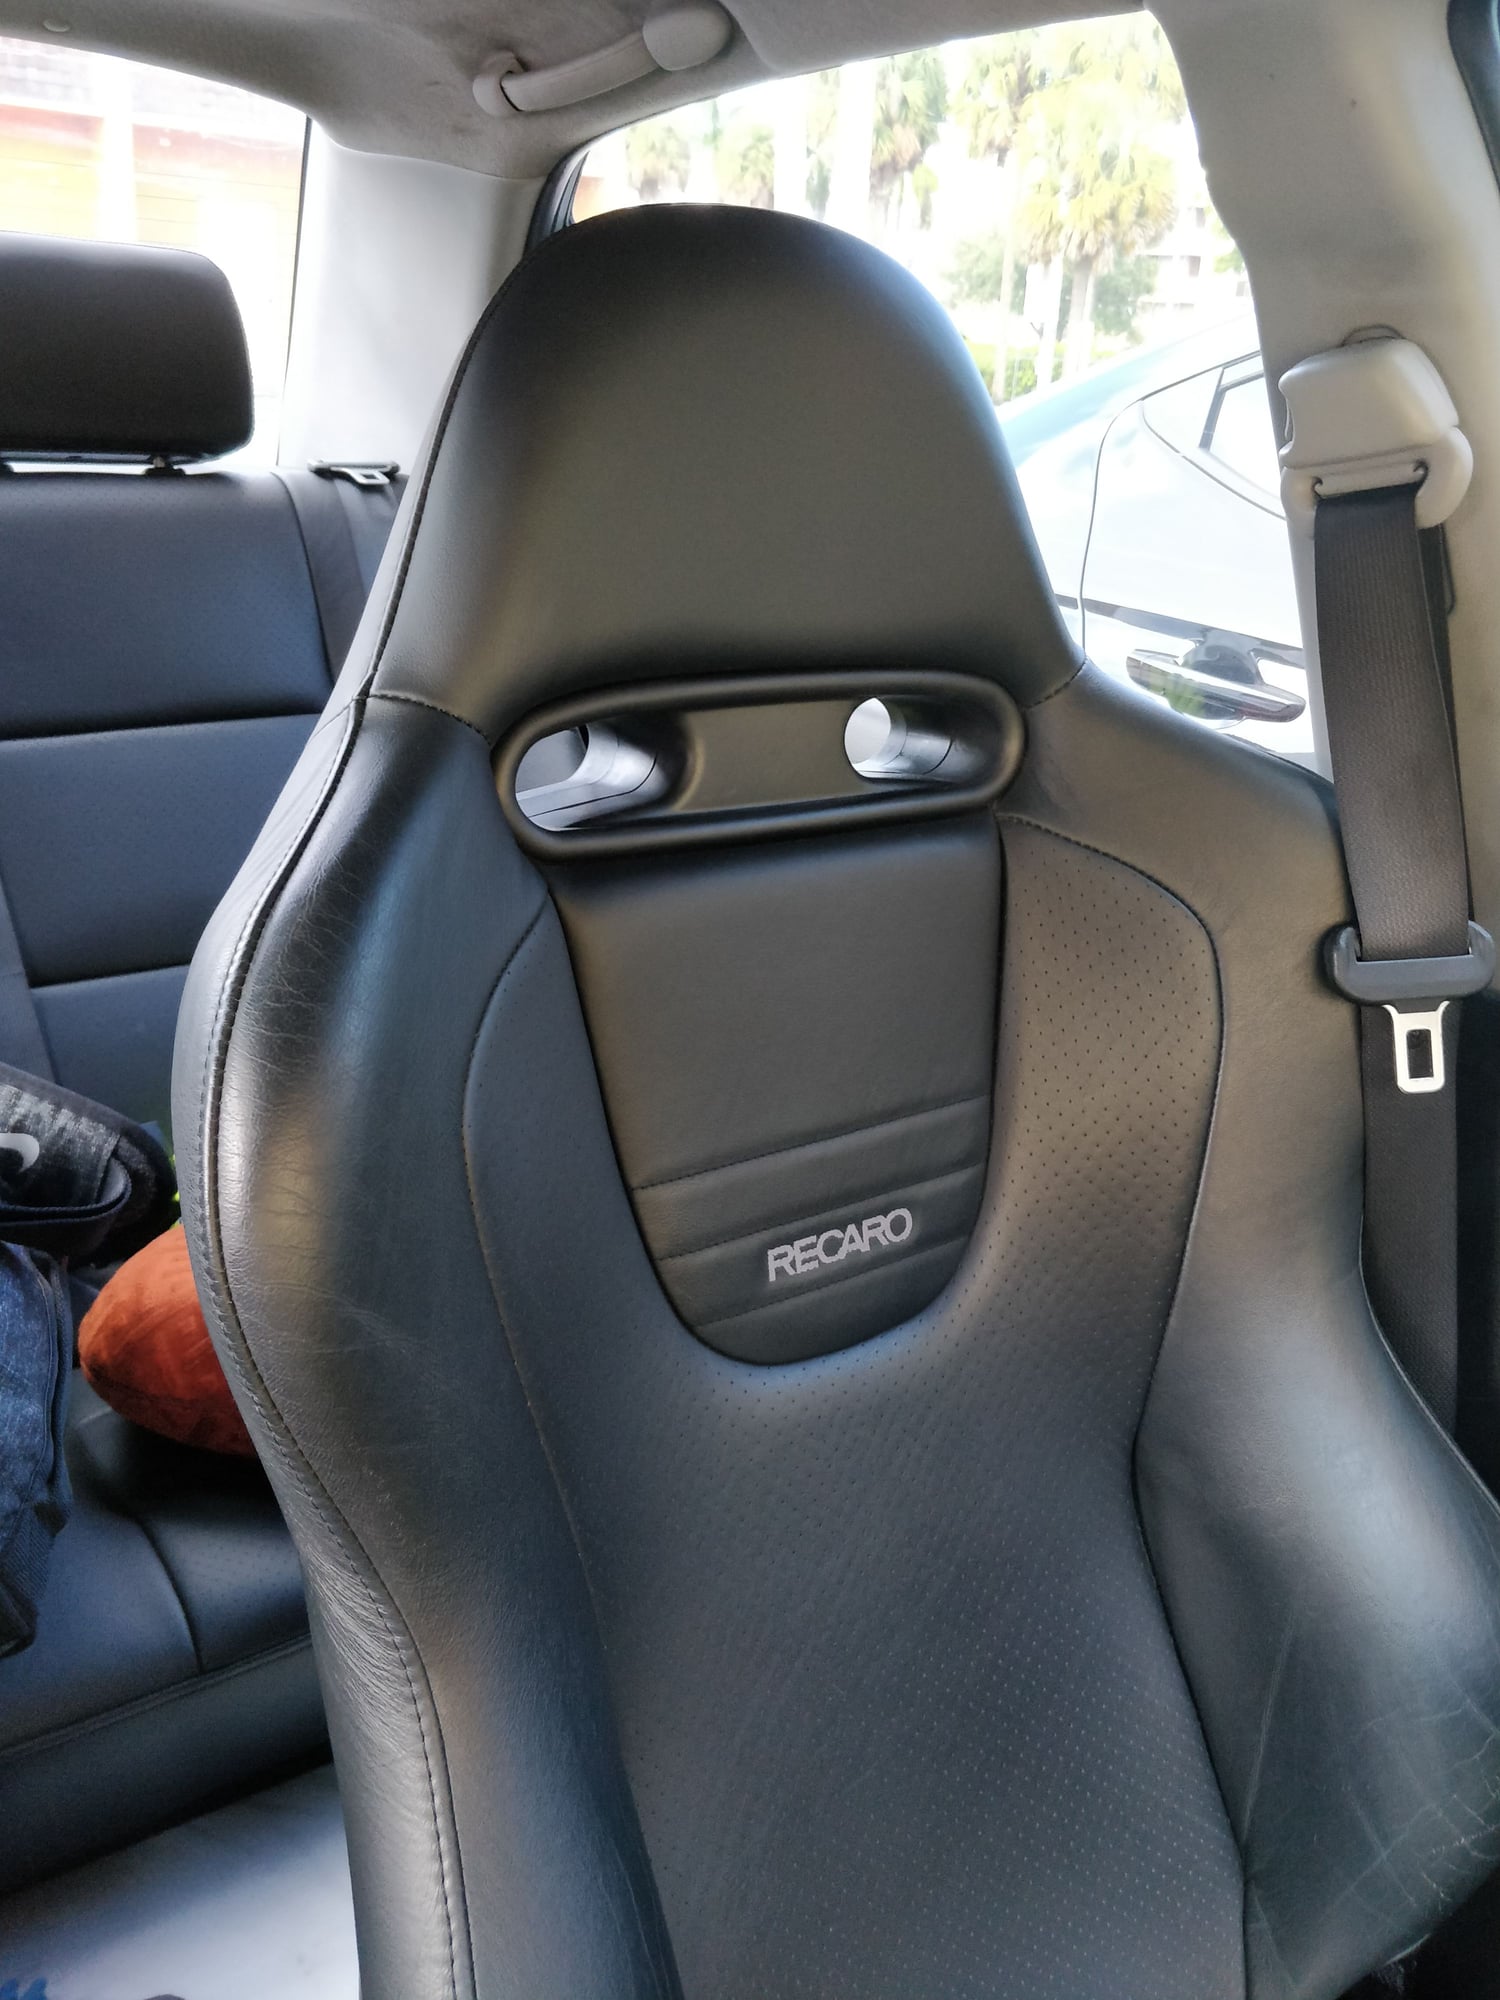 Interior/Upholstery - Evolution IX SSL Front Seats Great Condition - Used - 2004 to 2006 Mitsubishi Lancer Evolution - Sunrise, FL 33313, United States